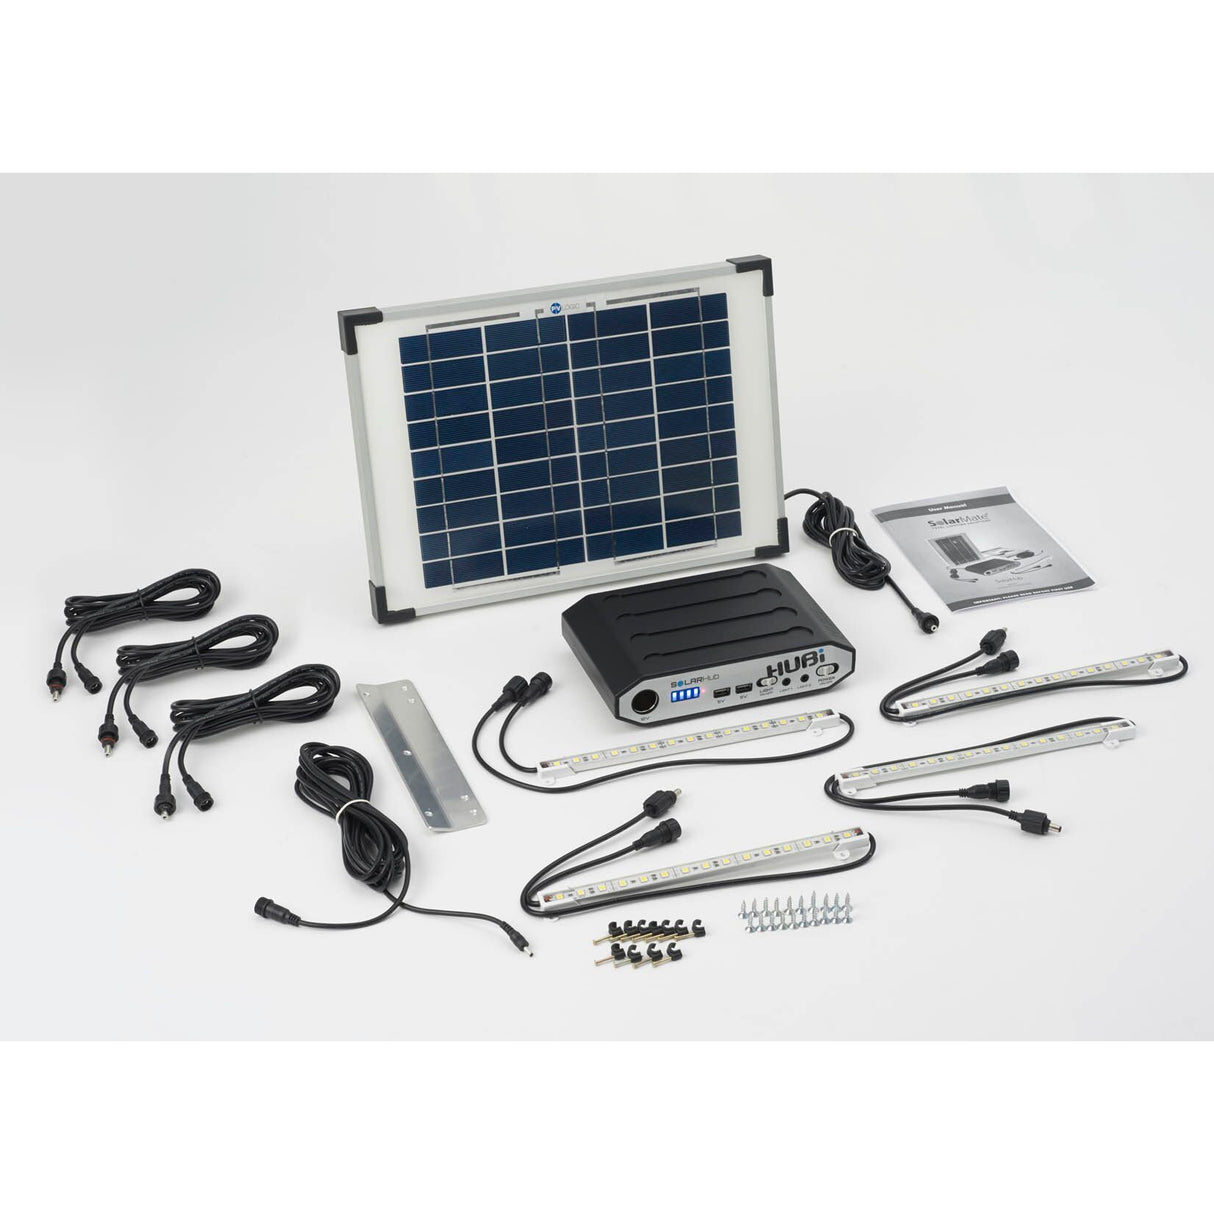 Solar Hub 64 Complete Kit